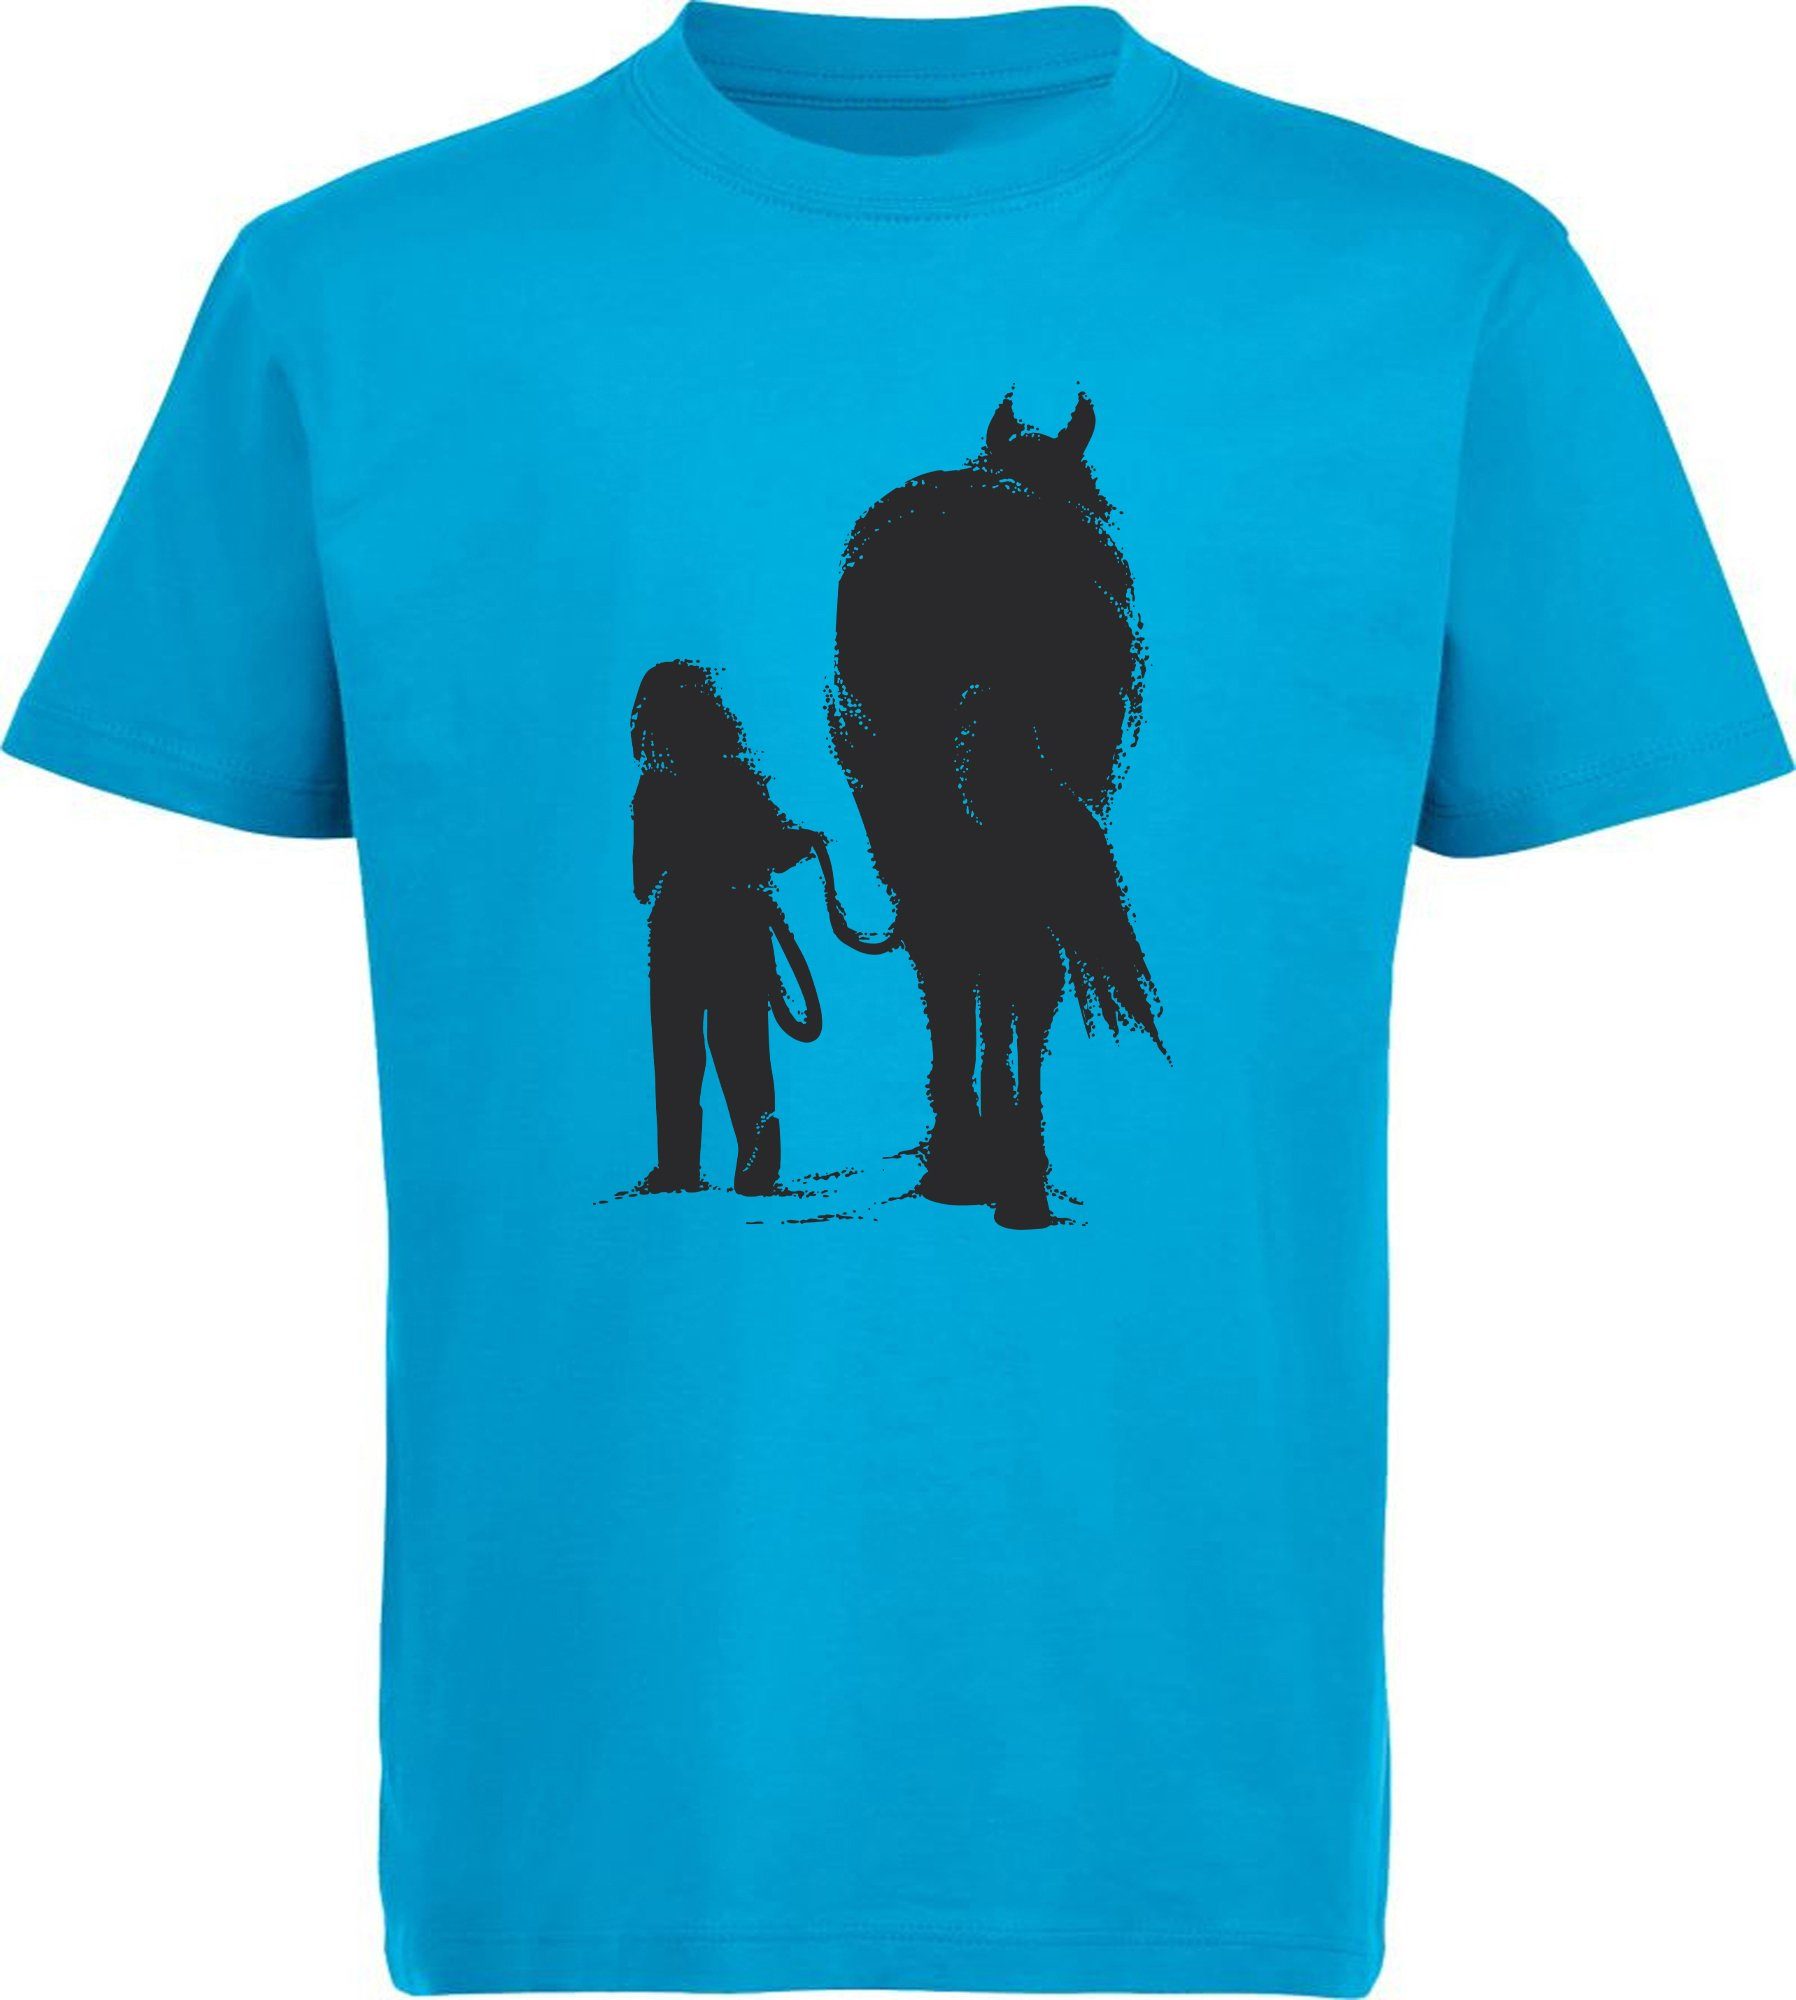 MyDesign24 T-Shirt Kinder Print Shirt bedruckt - Mädchen & Pferd beim Spaziergang Baumwollshirt mit Aufdruck, i250 aqua blau | T-Shirts